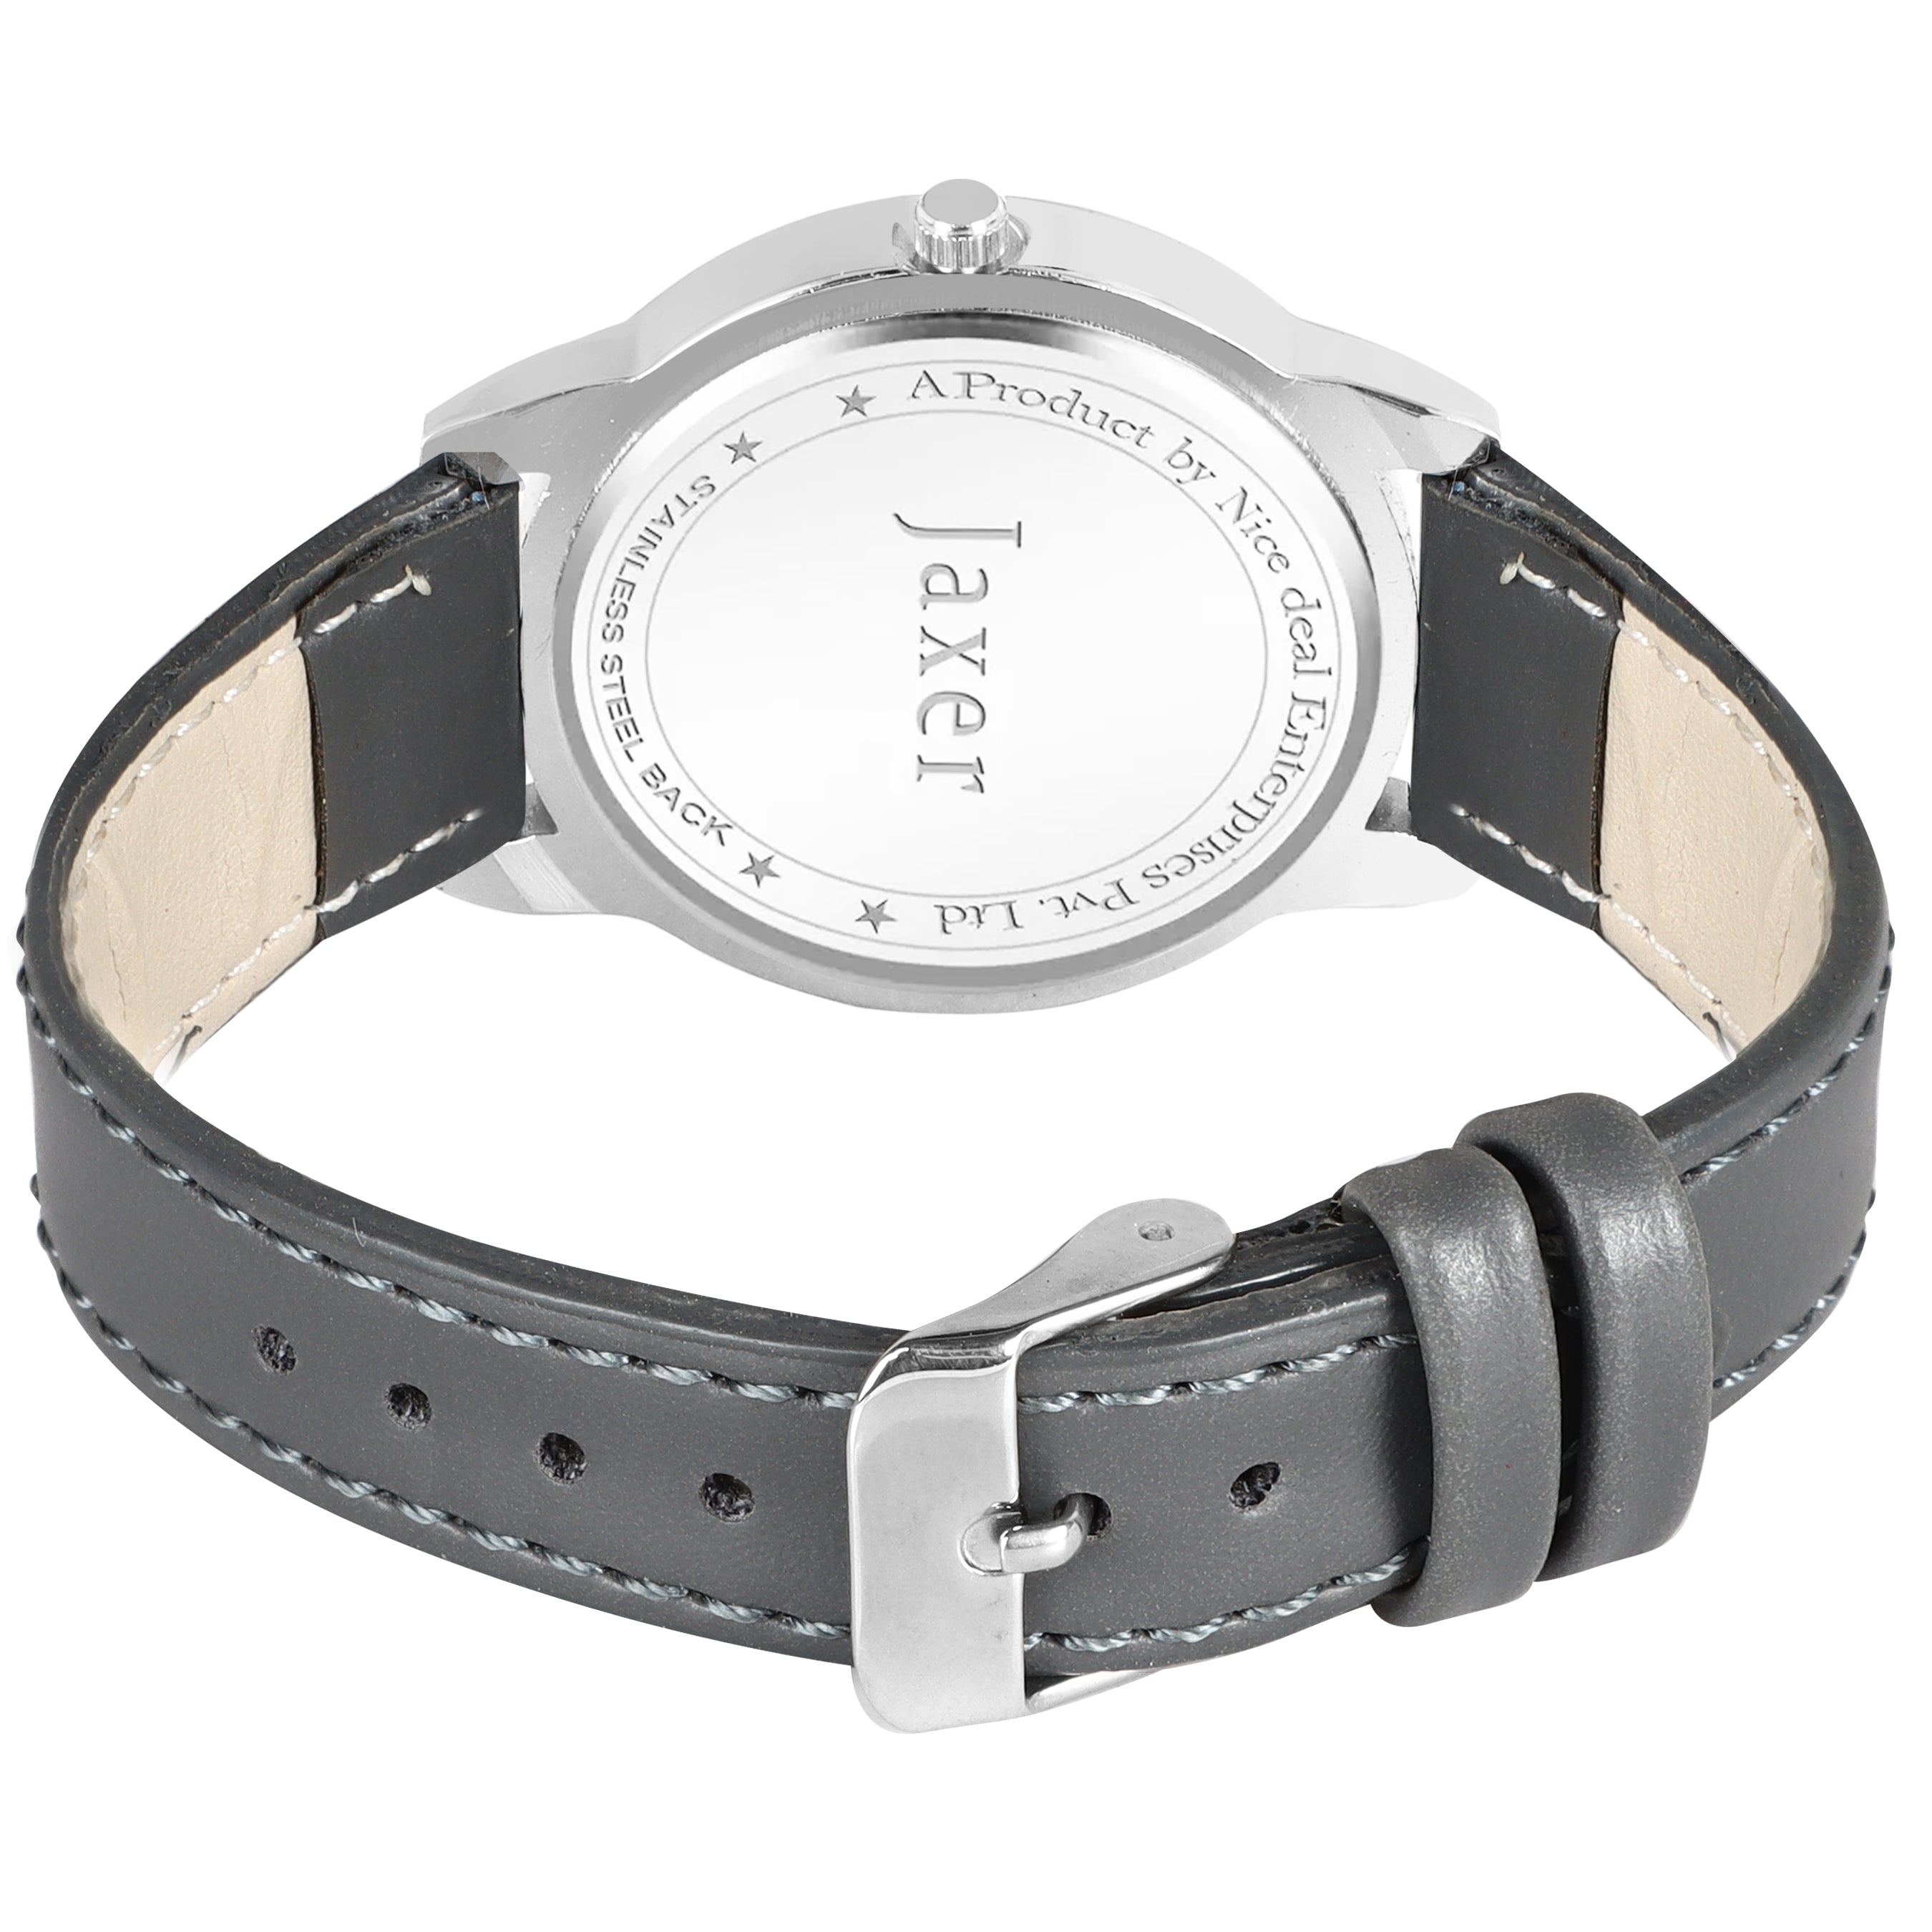 Jaxer Grey Leather Strap Analog Wrist Watch for Women - JXRW2575 - Jainx Store